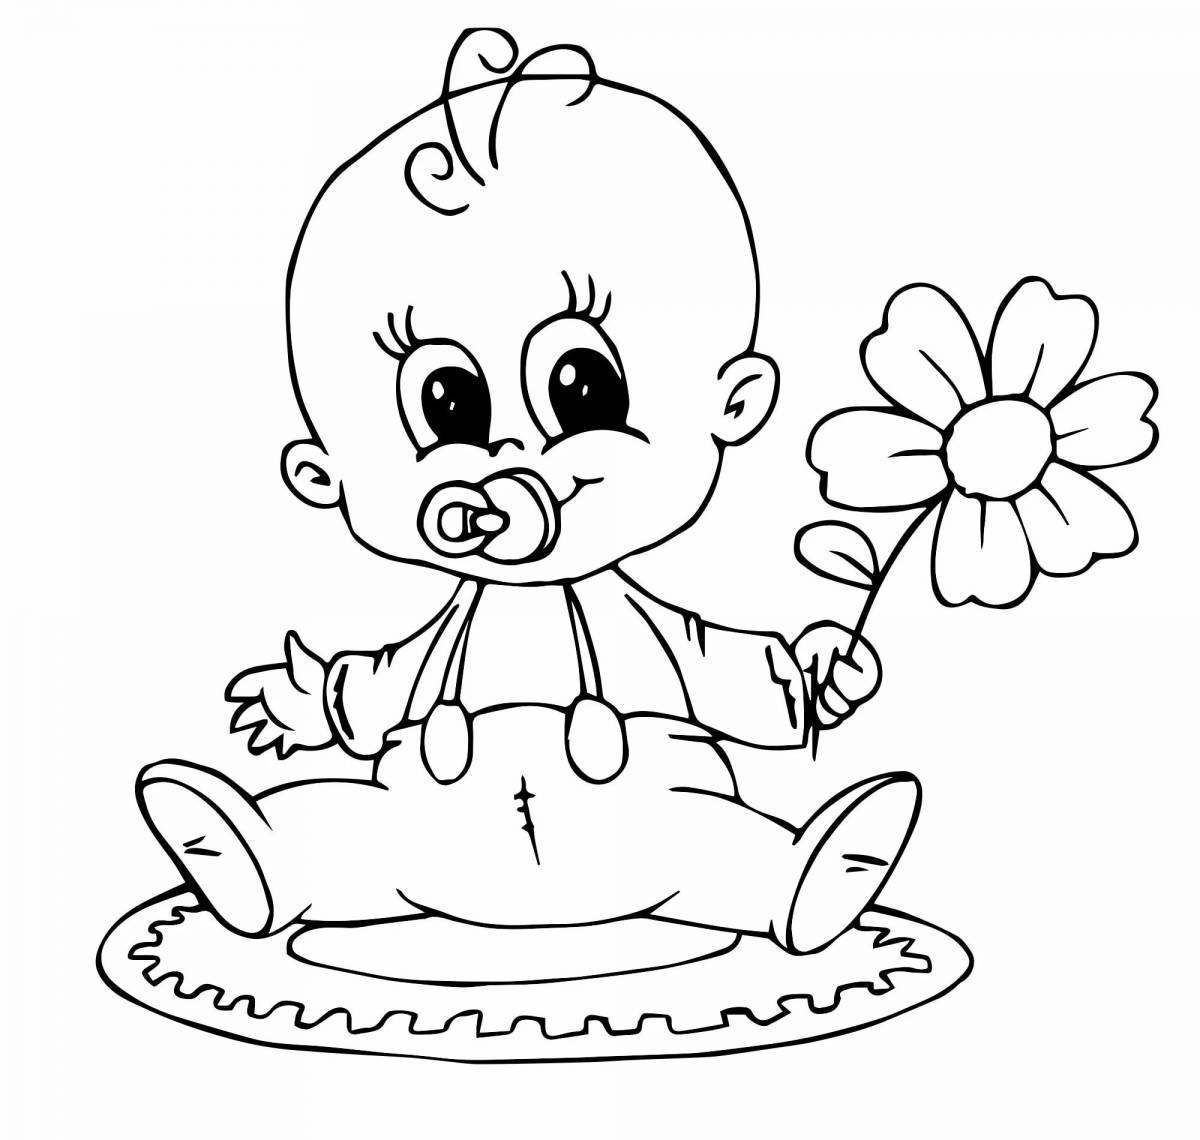 Cute little child coloring